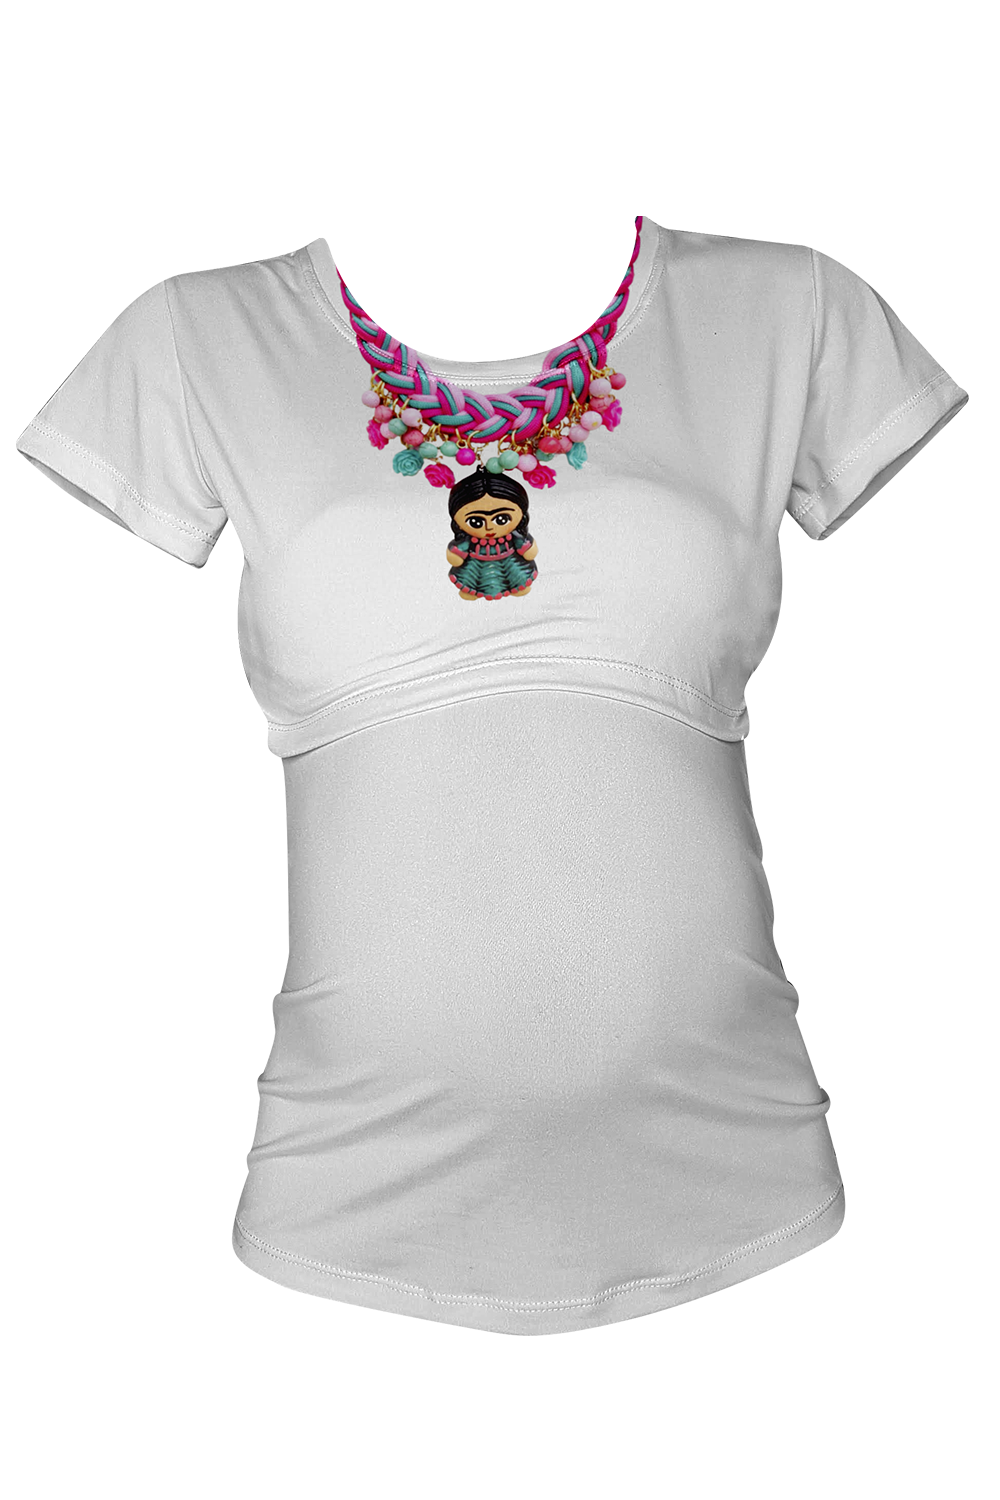 Blusa maternidad-lactancia. Collar Frida